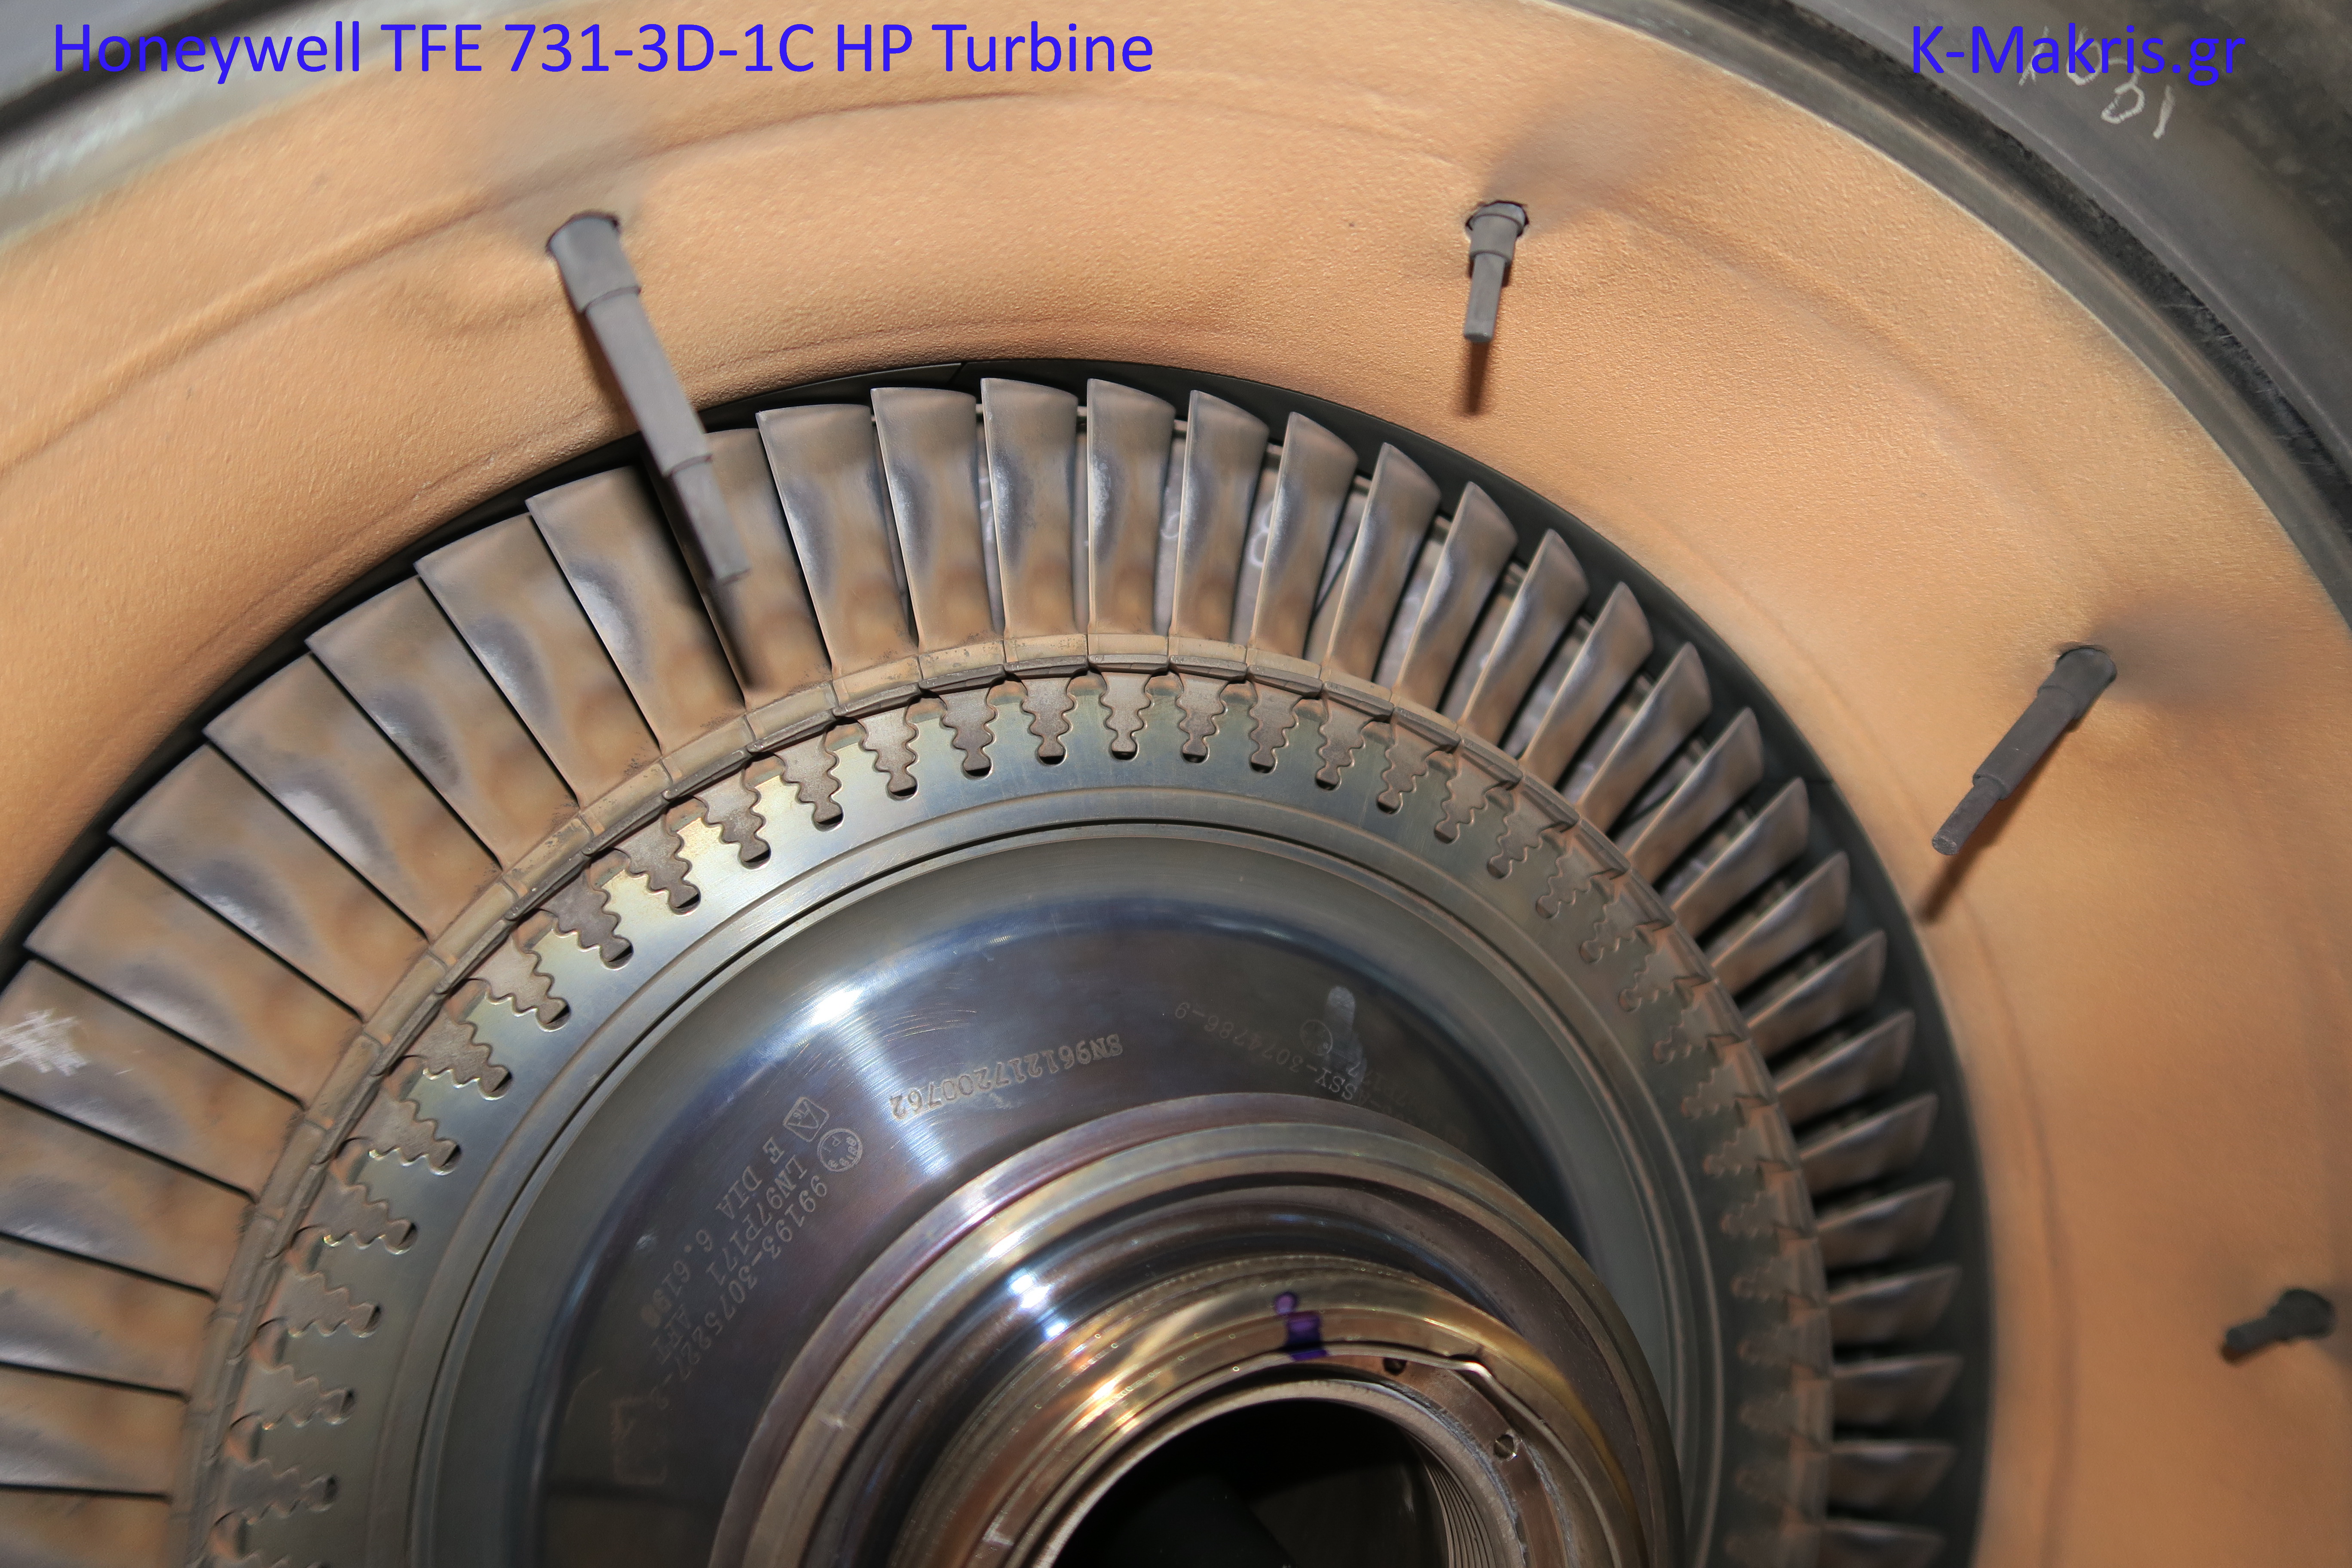 Honeywell TFE 731-3D-1C HP turbine and ITT sensors